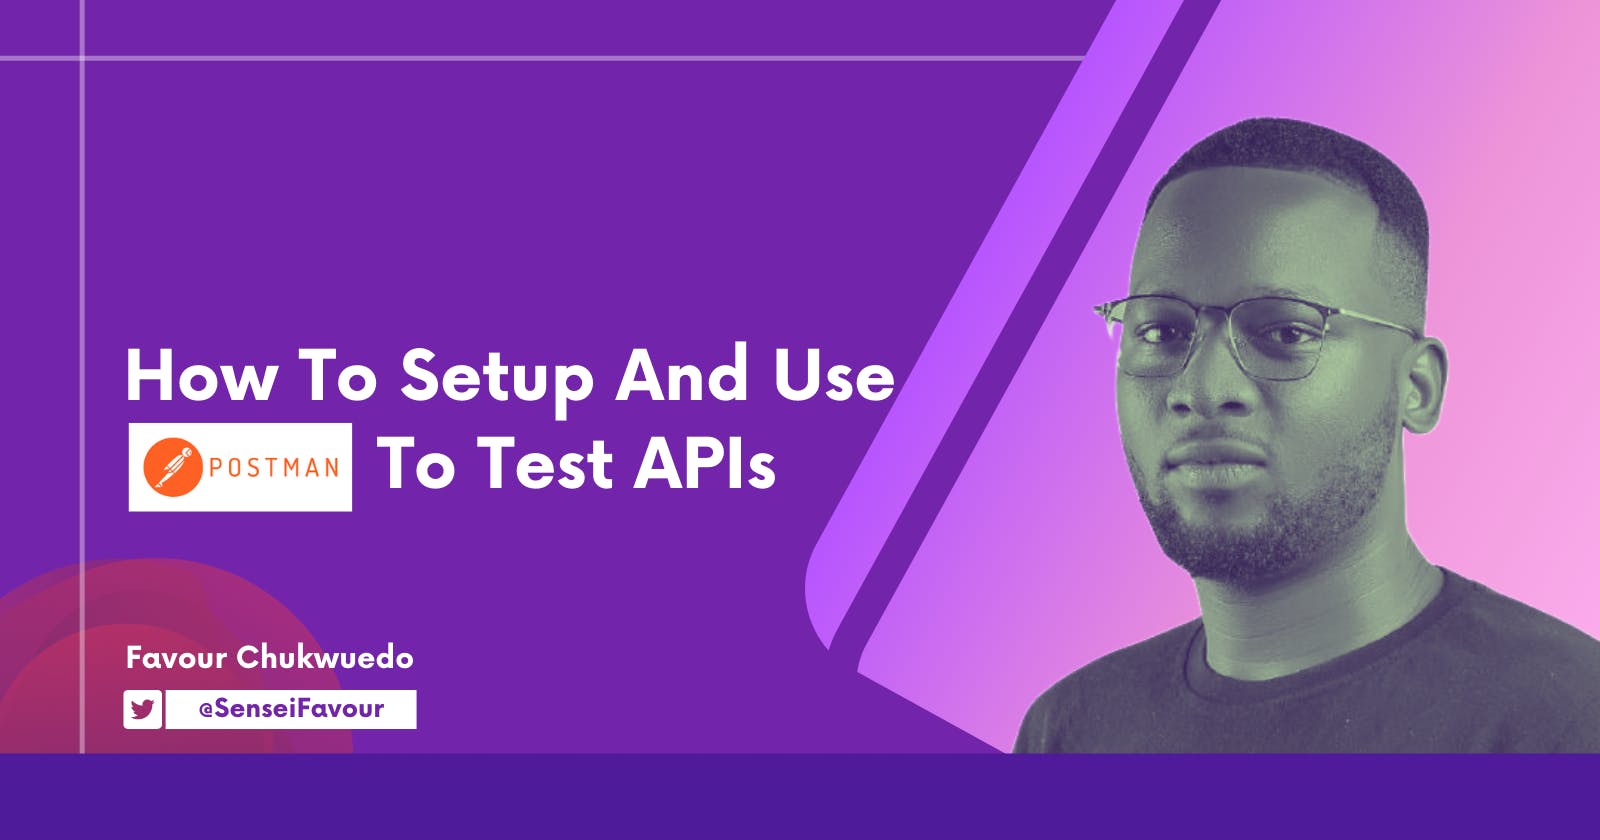 How to Setup and Use Postman to Test APIs